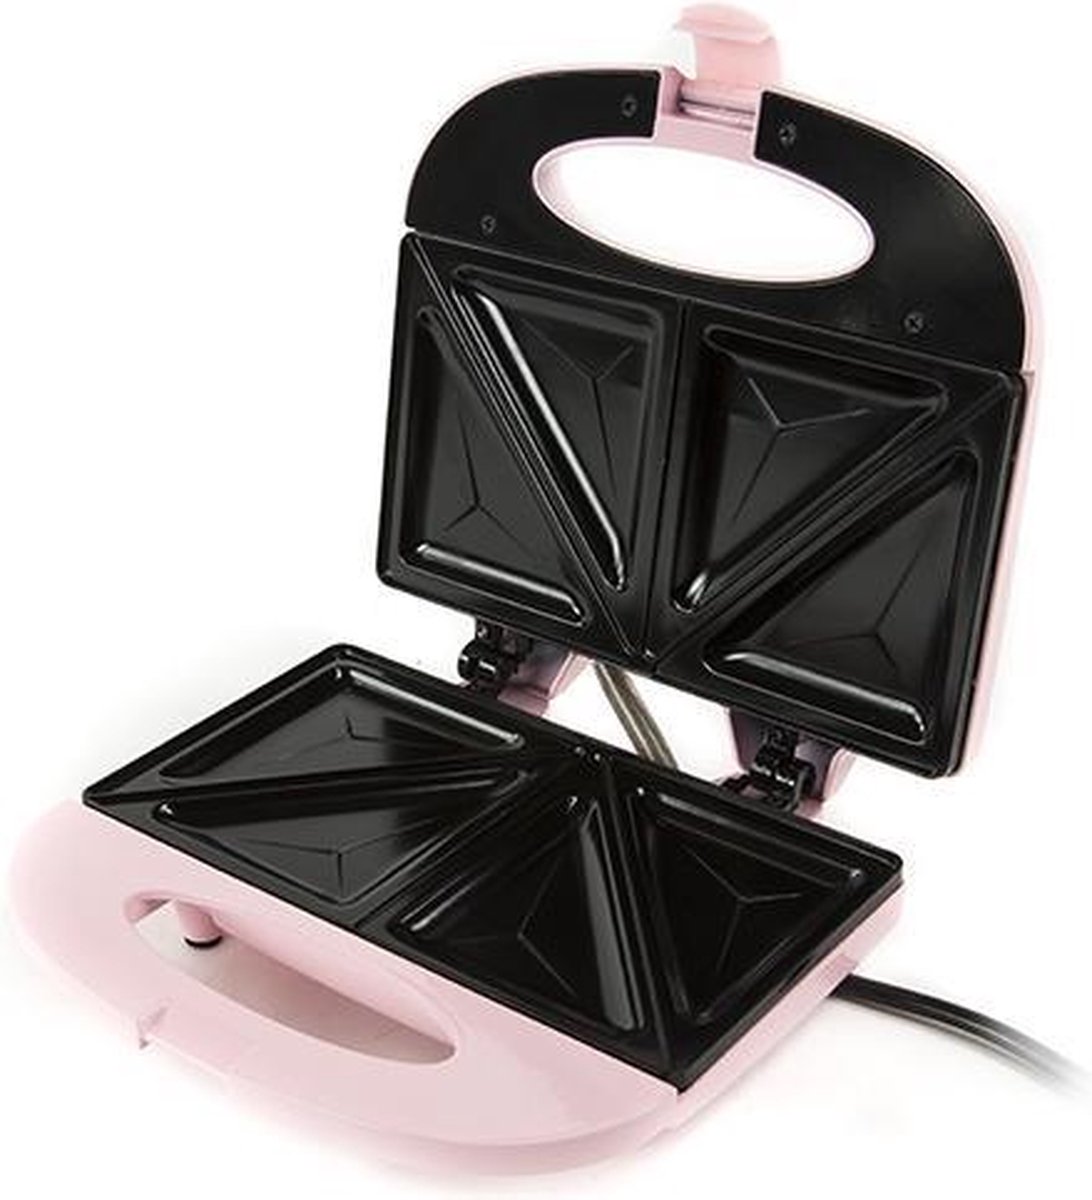 Mesko MS 3029 Pink tosti-ijzer | bol.com